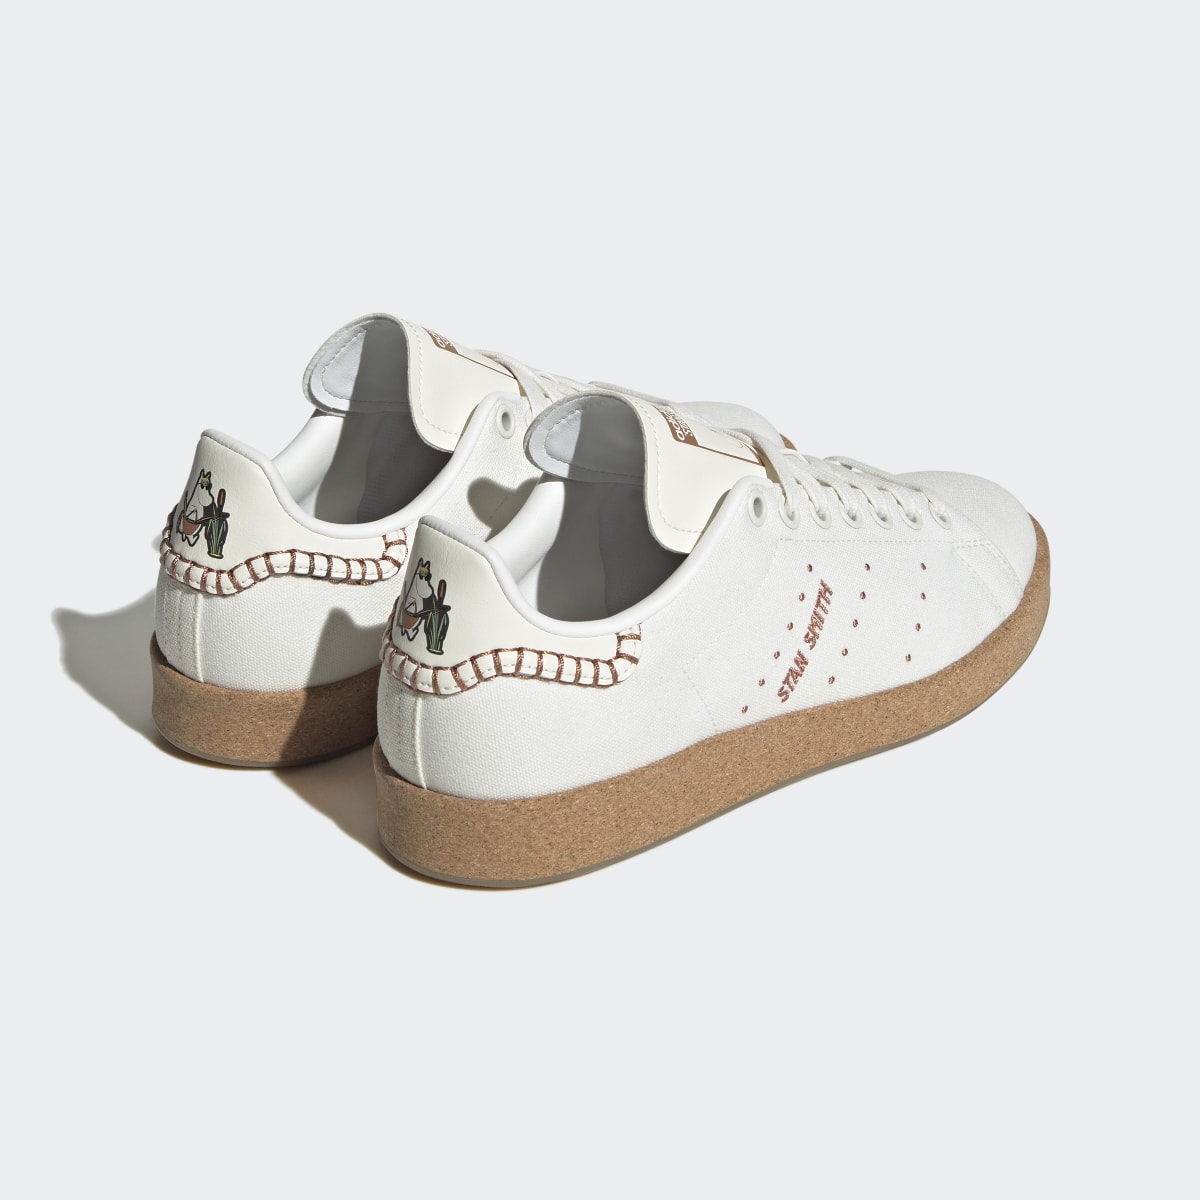 Adidas Stan Smith x Moomin Shoes. 6